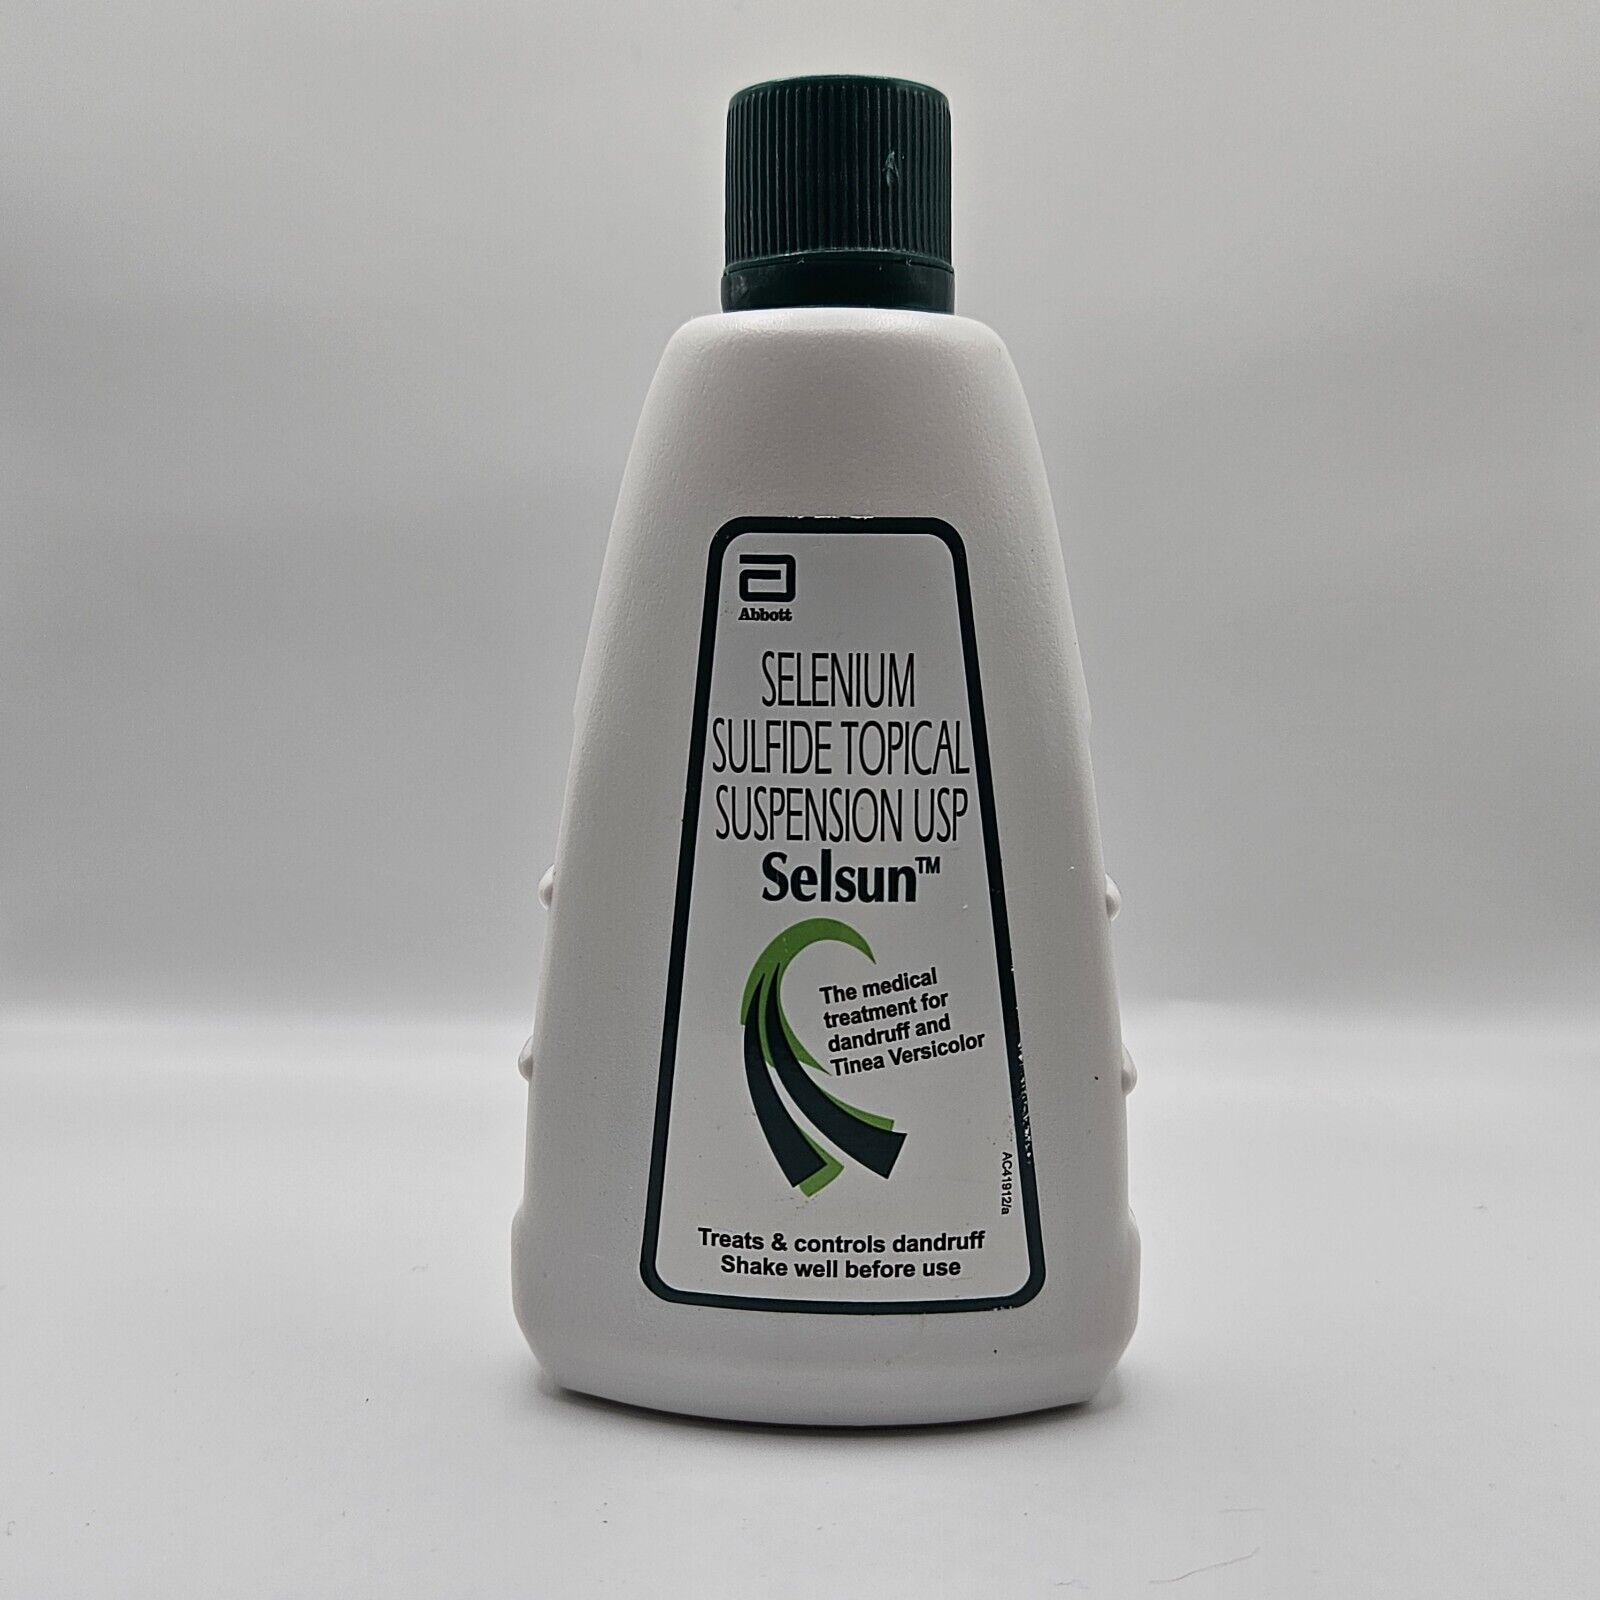 Selsun 120 ml Suspension Exp. 9/2025 OFFICIAL USA Anti Dandruff Shampoo